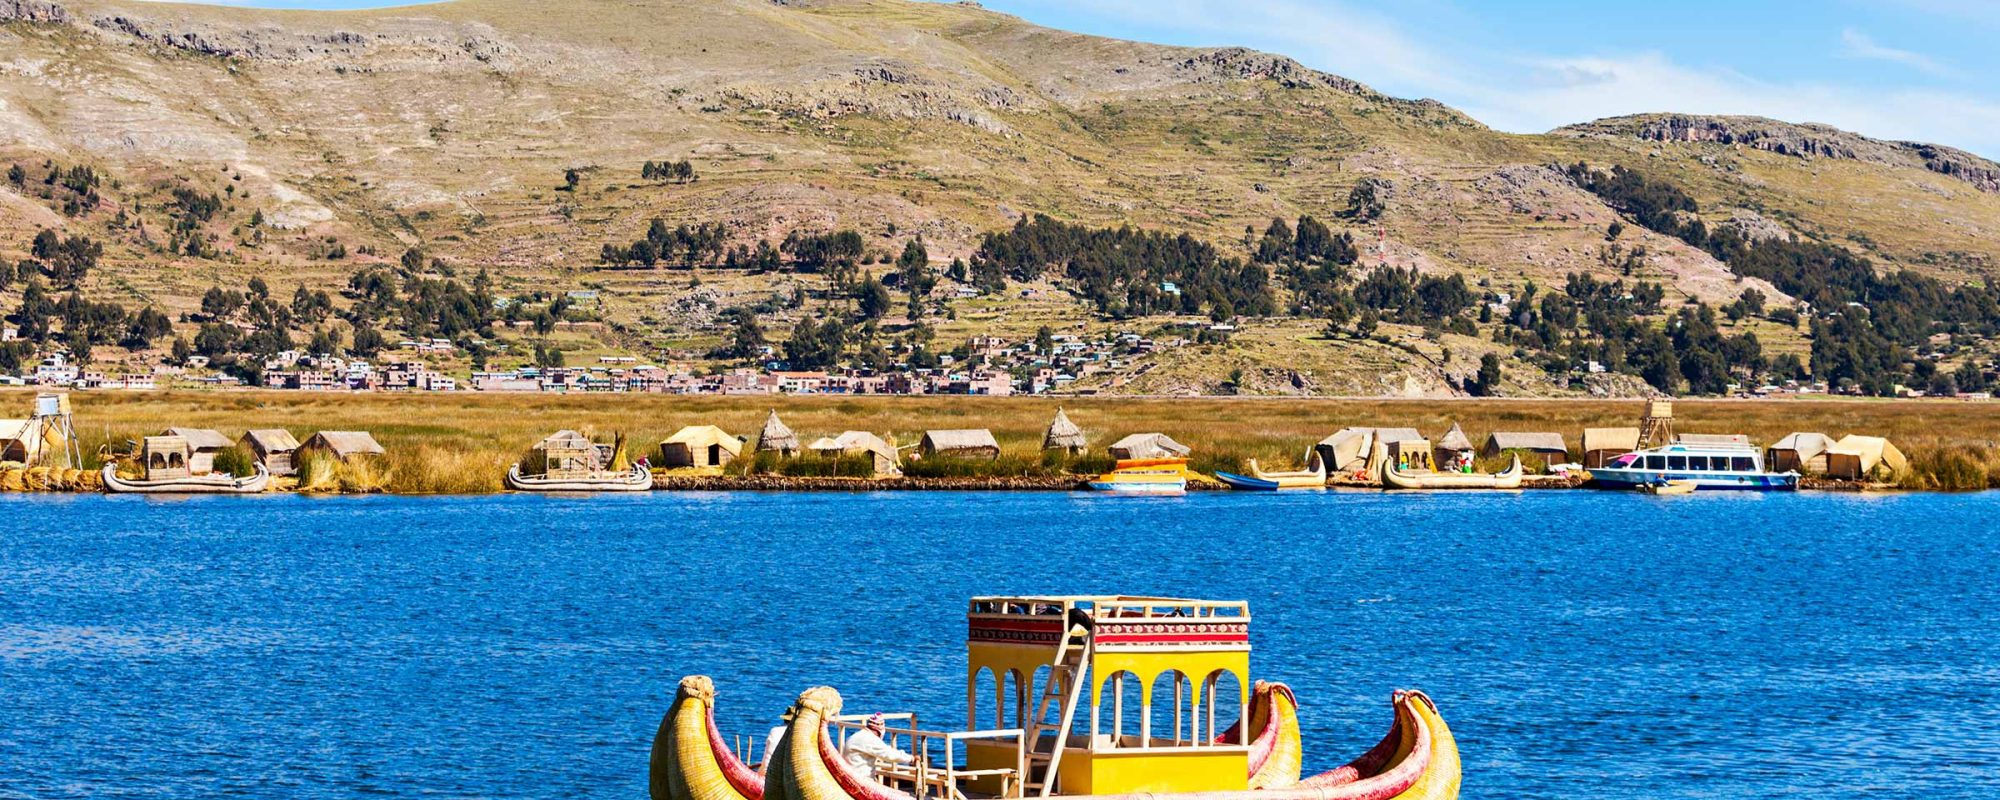 Titicaca Lake 3 Days